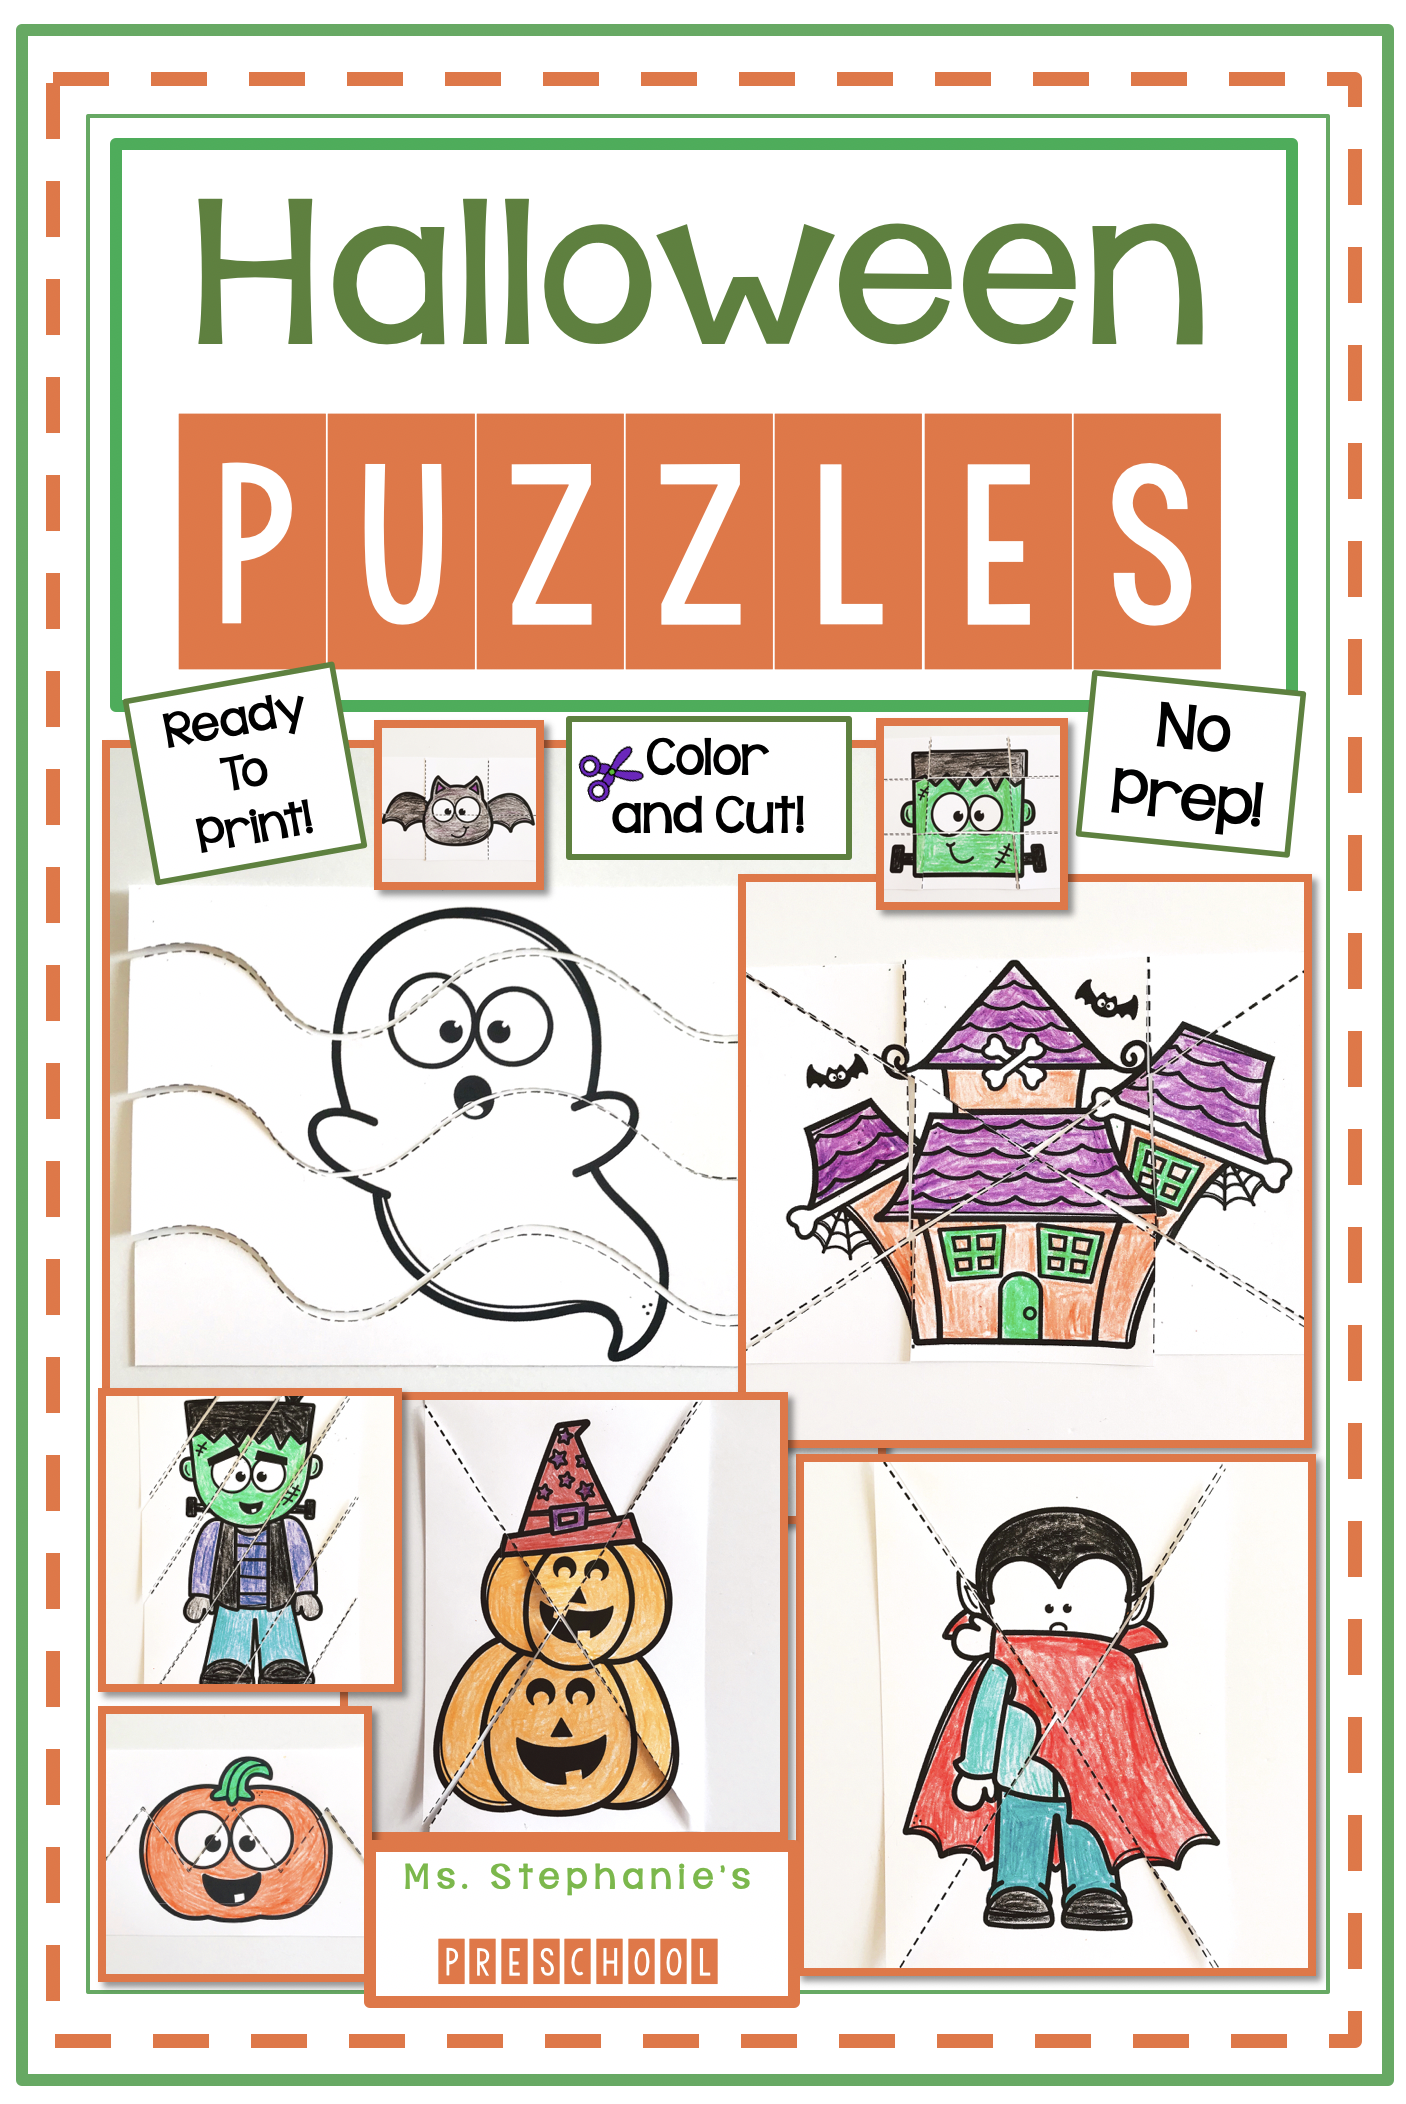 Halloween Puzzles Ms. Stephanie's Preschool